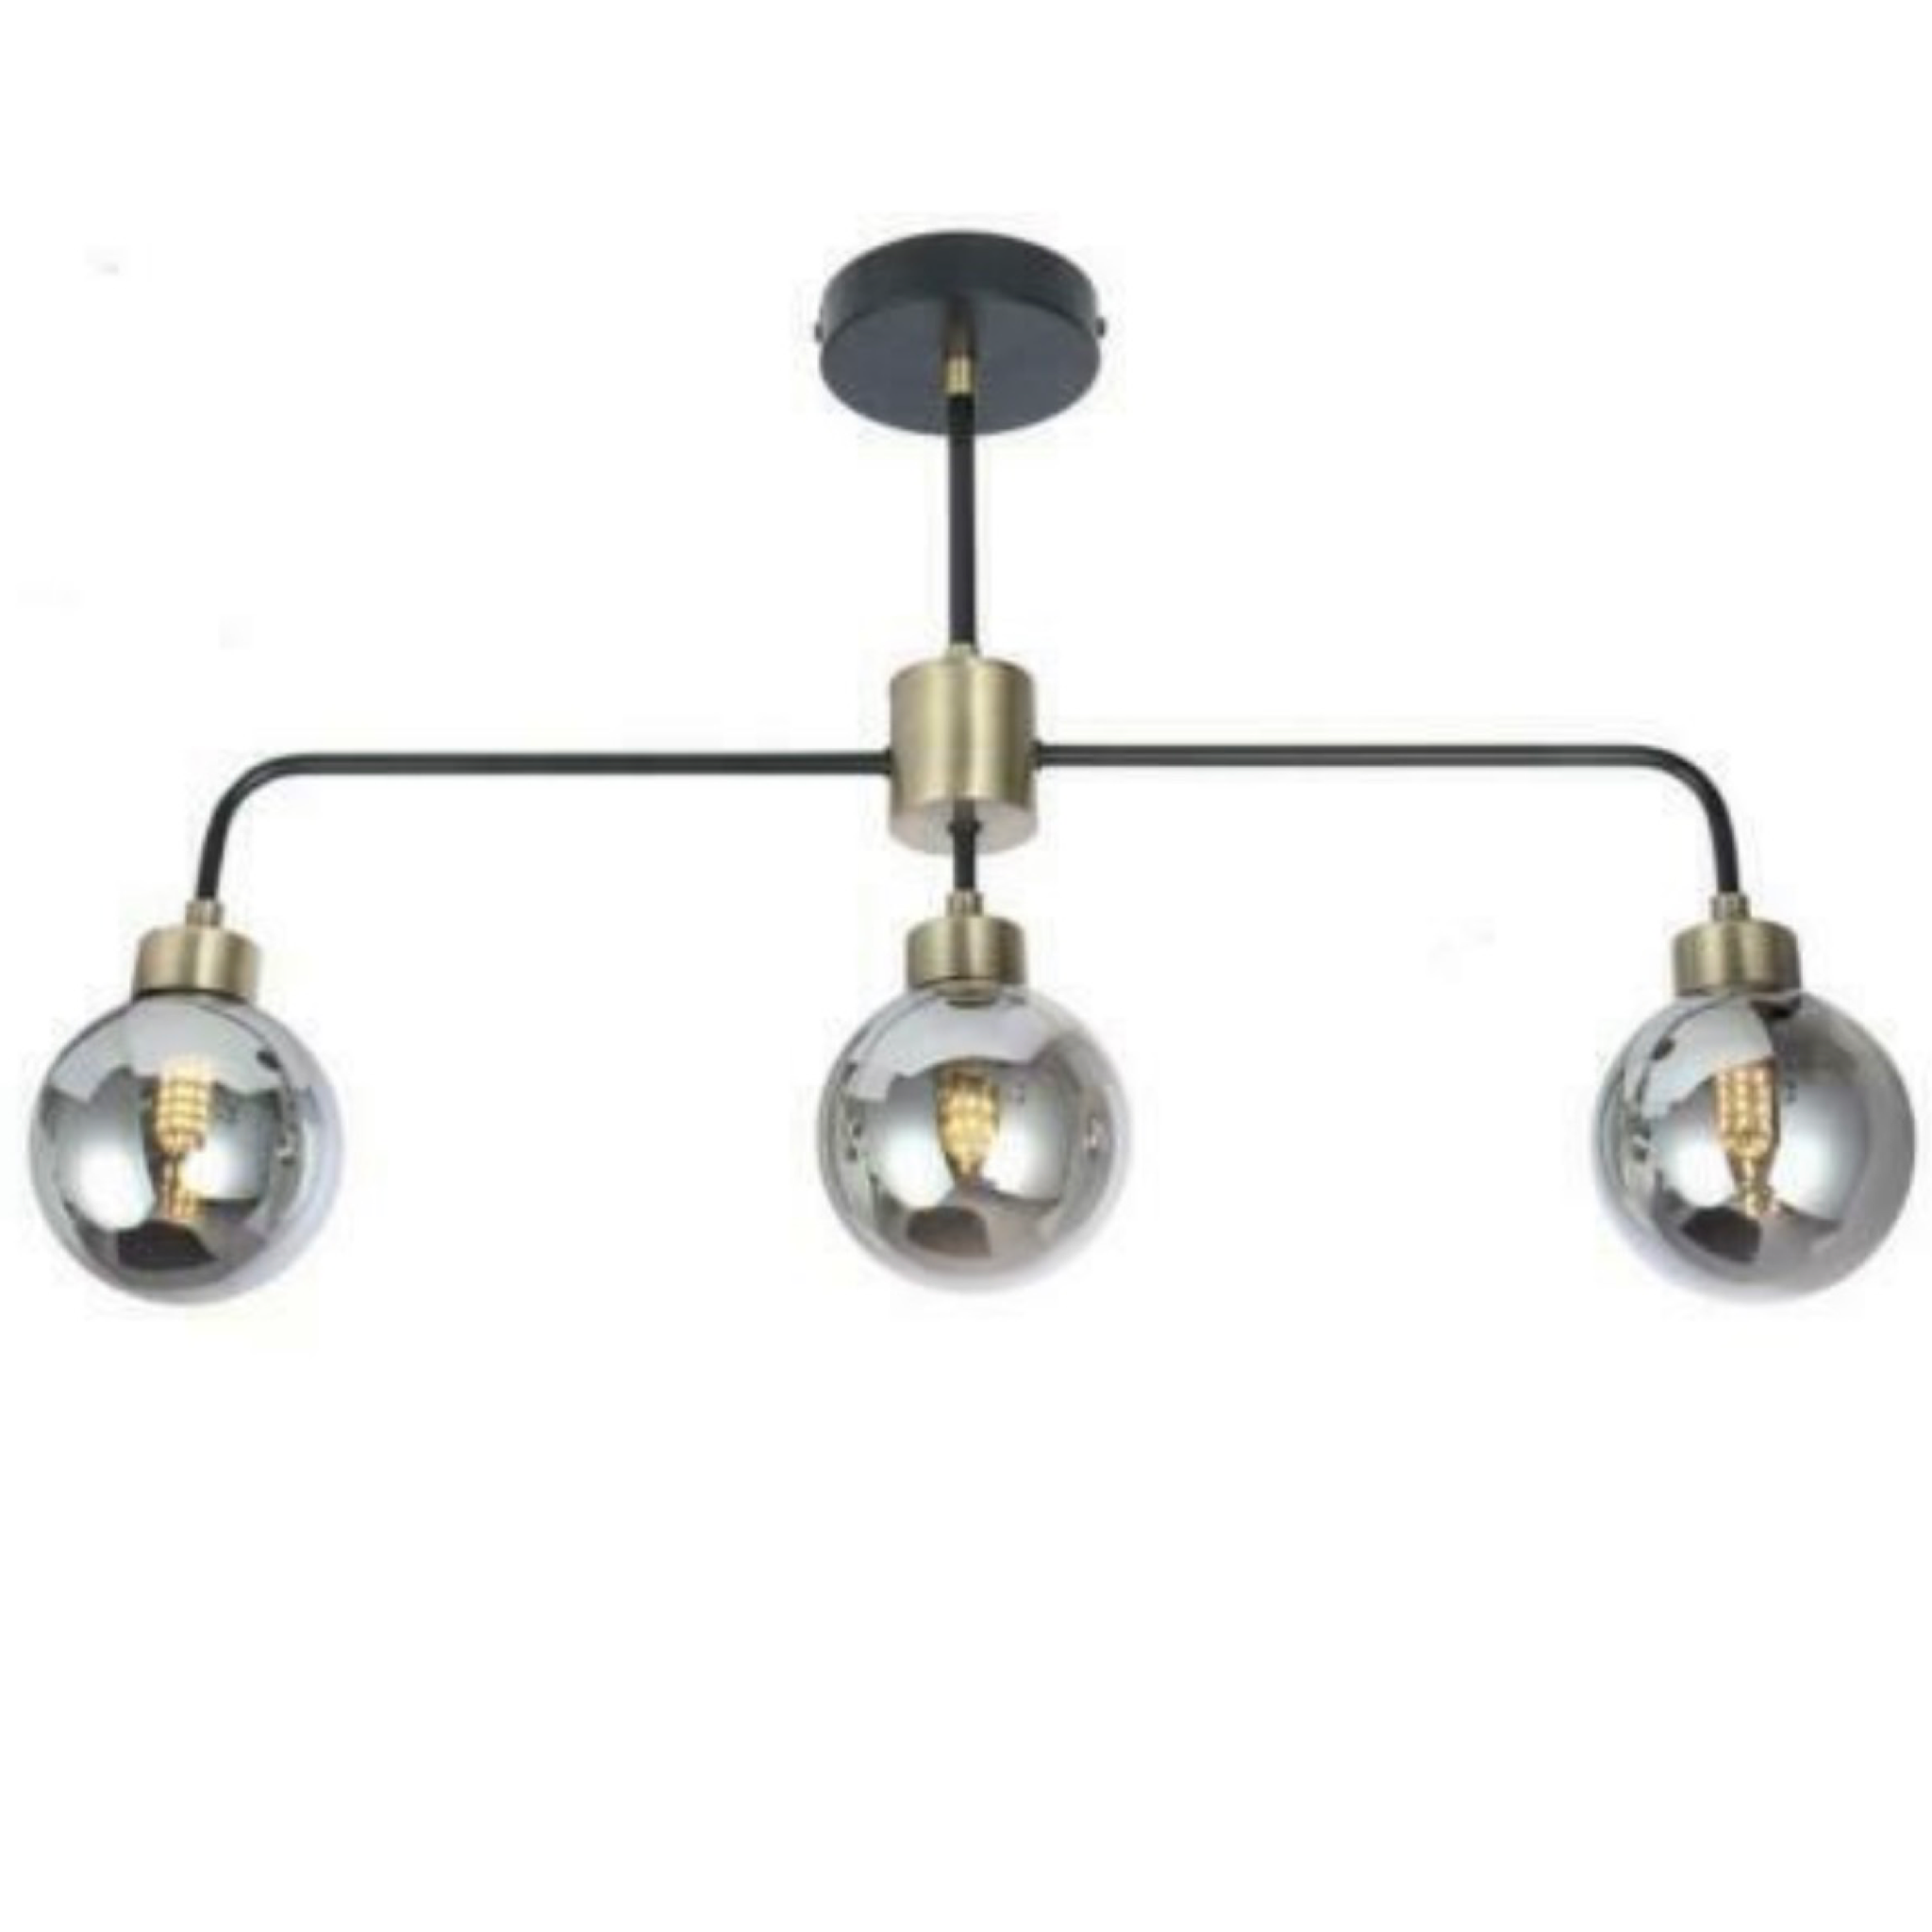 3 Way classic ceiling light Black Brass Semi Flush with  Smoked Ball UKEW